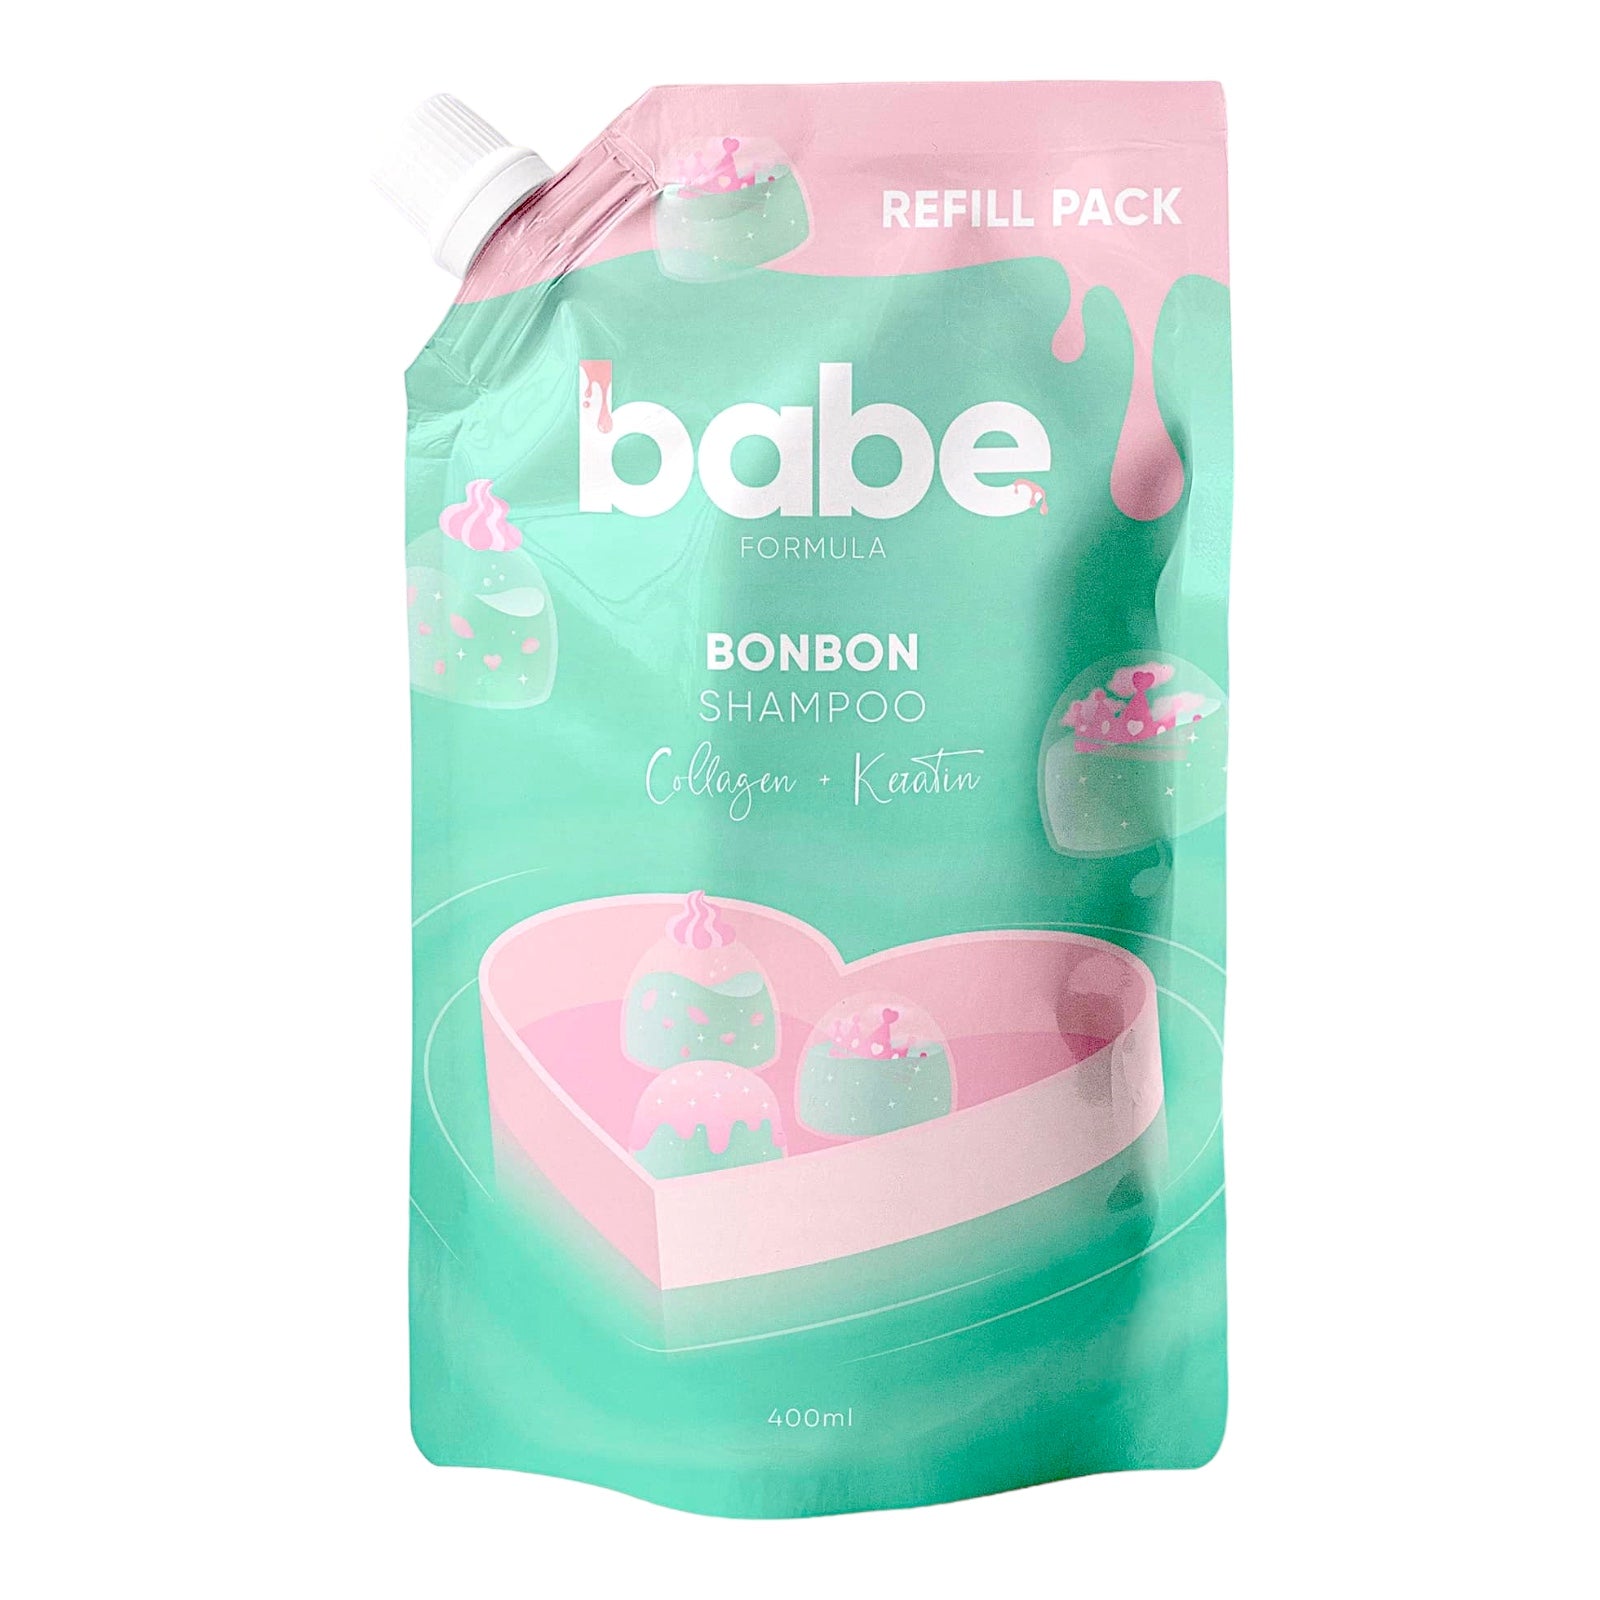 Babe Formula - BONBON SHAMPOO - Refill Pack 400 ml